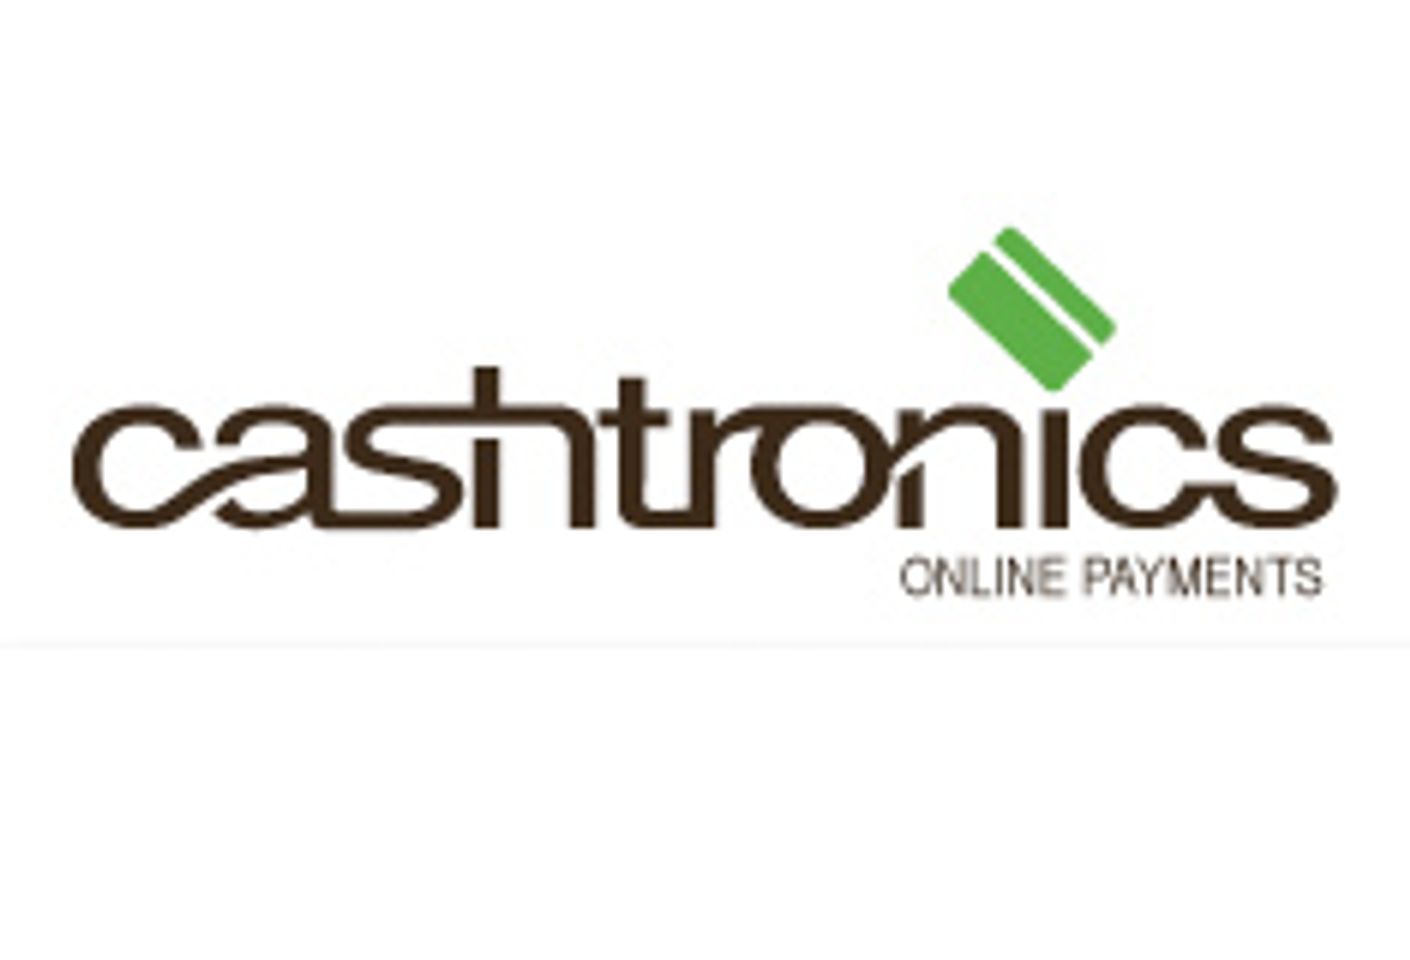 Cashtronics CEO Warns Against Dangers of Merchant Aggregation